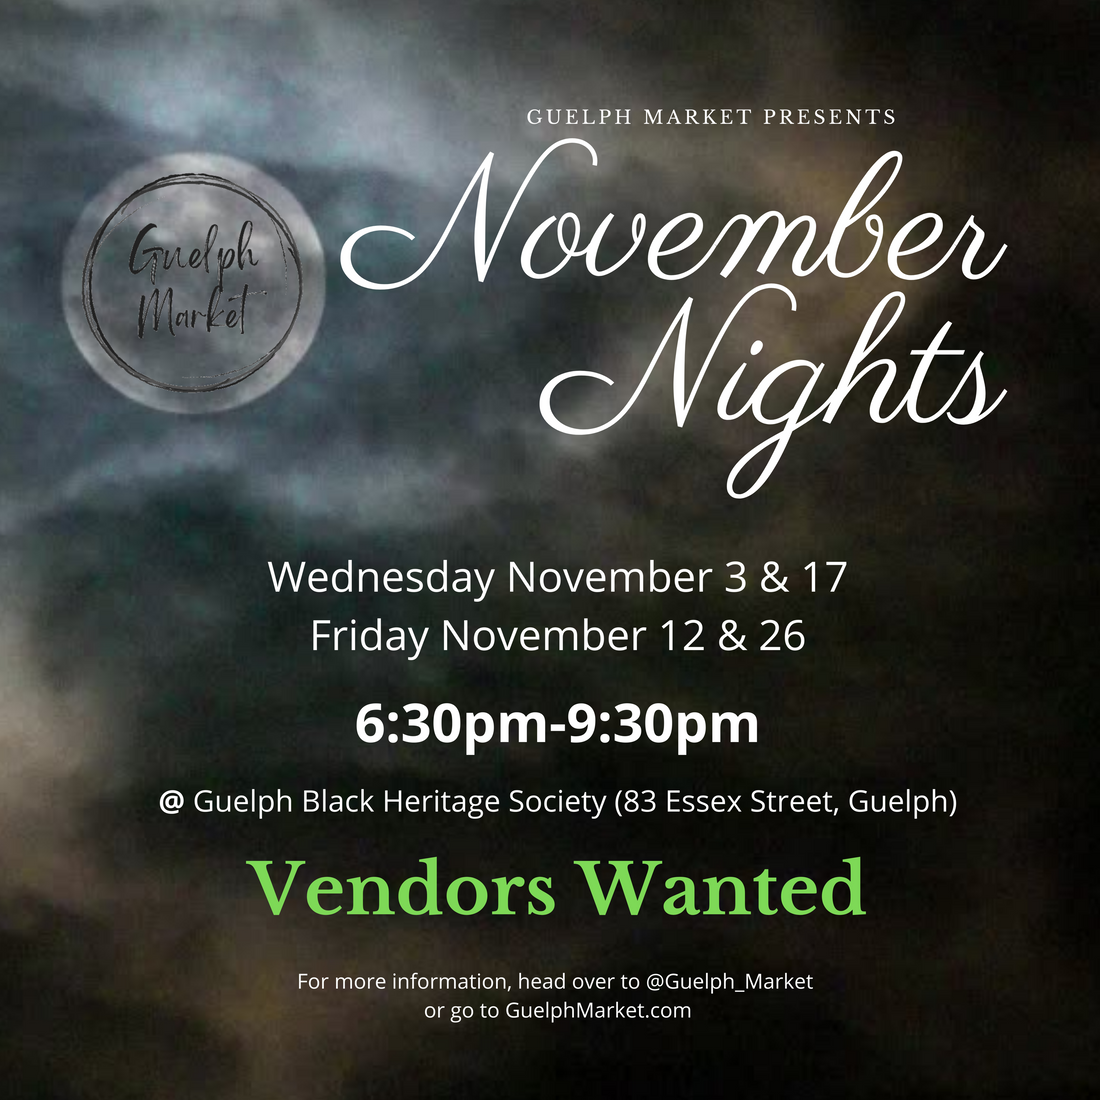 November Nights Market - Presented by Guelph Market